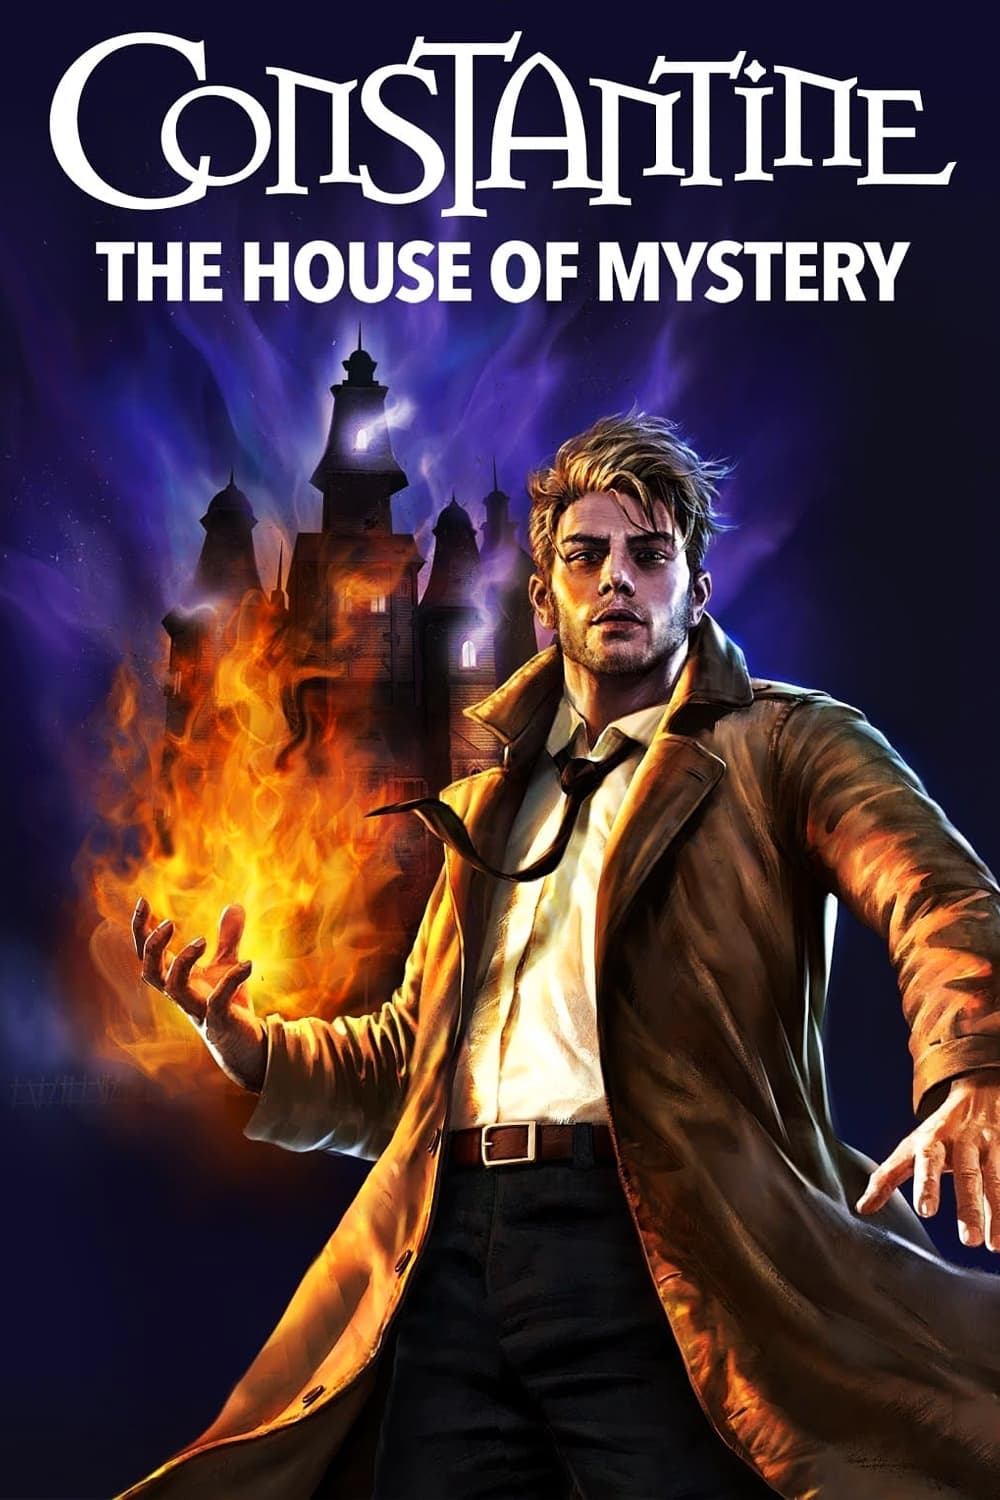 Constantine: La Casa del Misterio